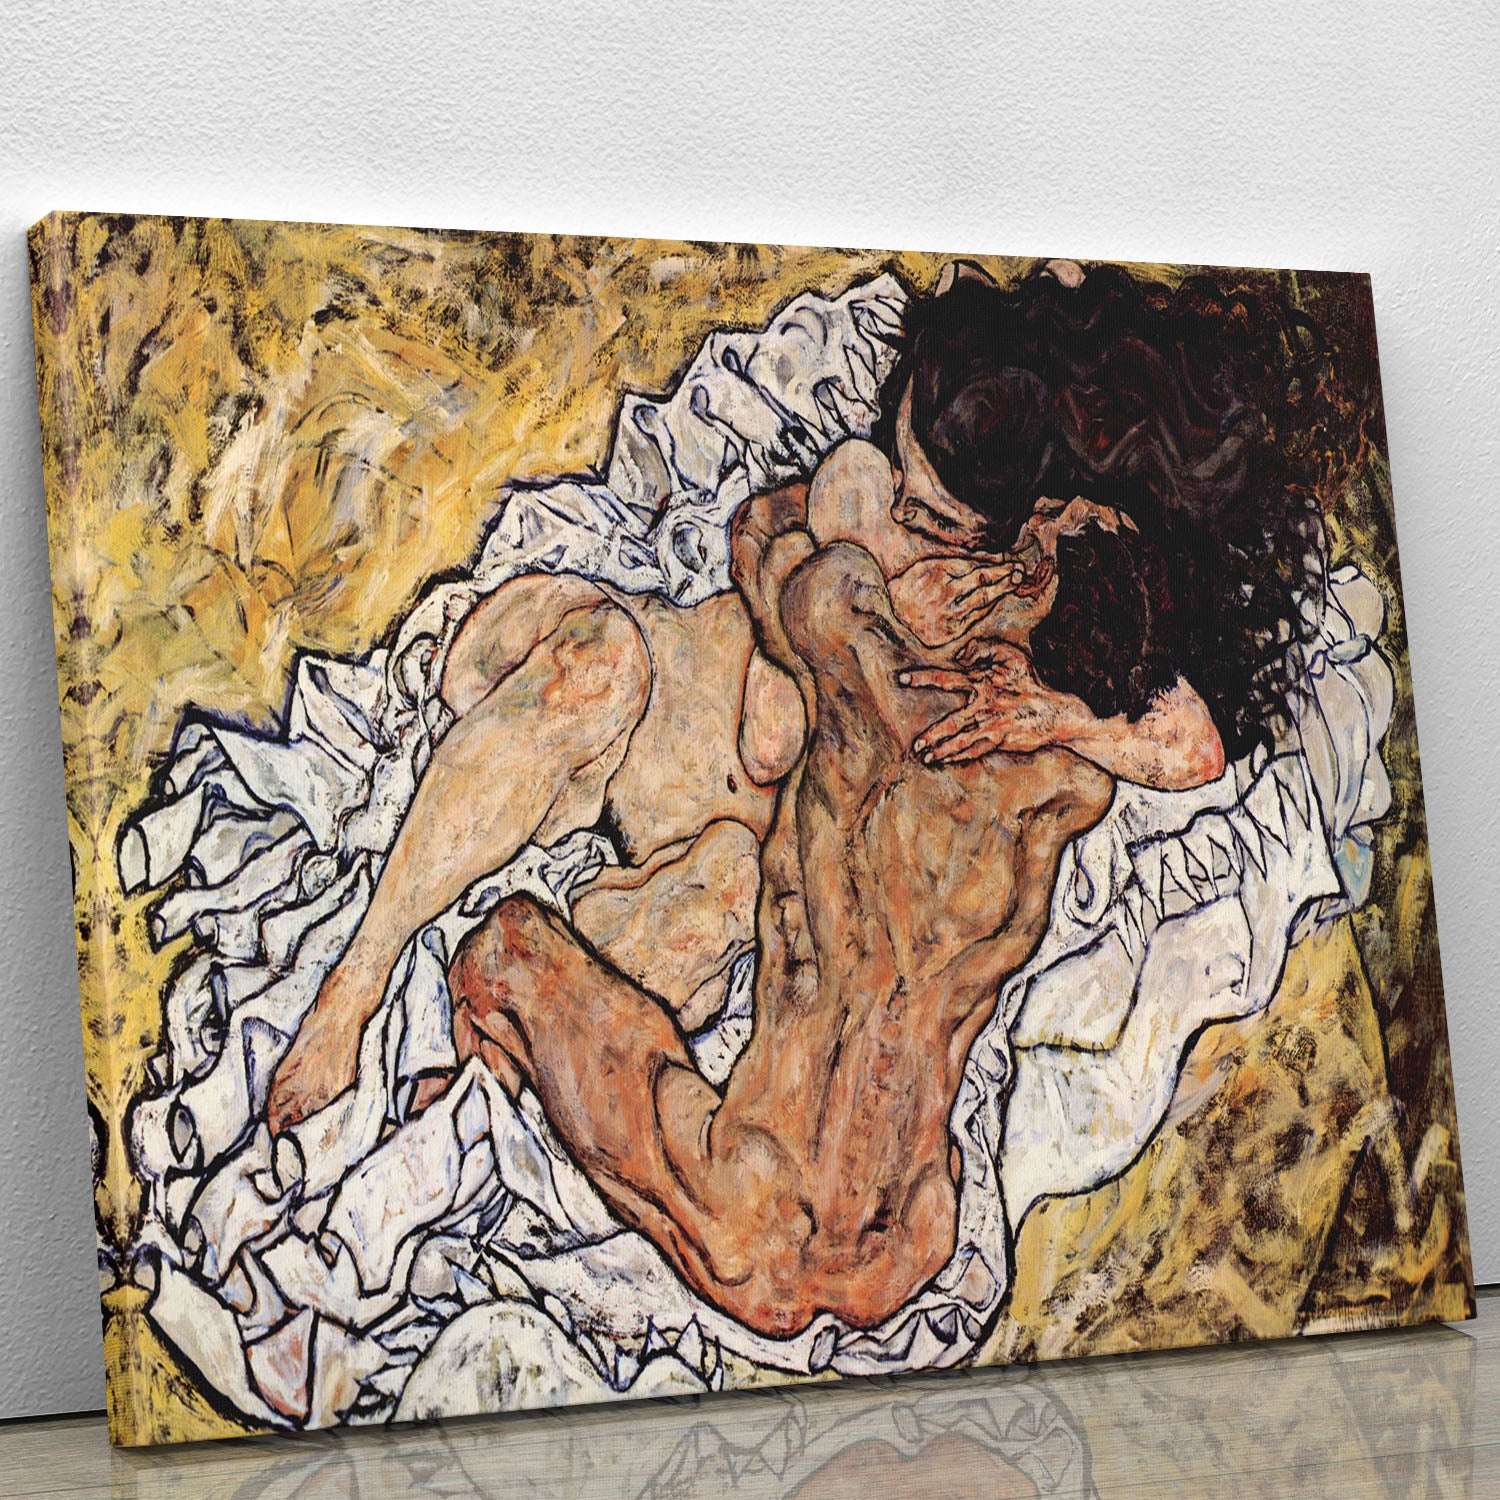 The Embrace by Egon Schiele Canvas Print or Poster - Canvas Art Rocks - 1